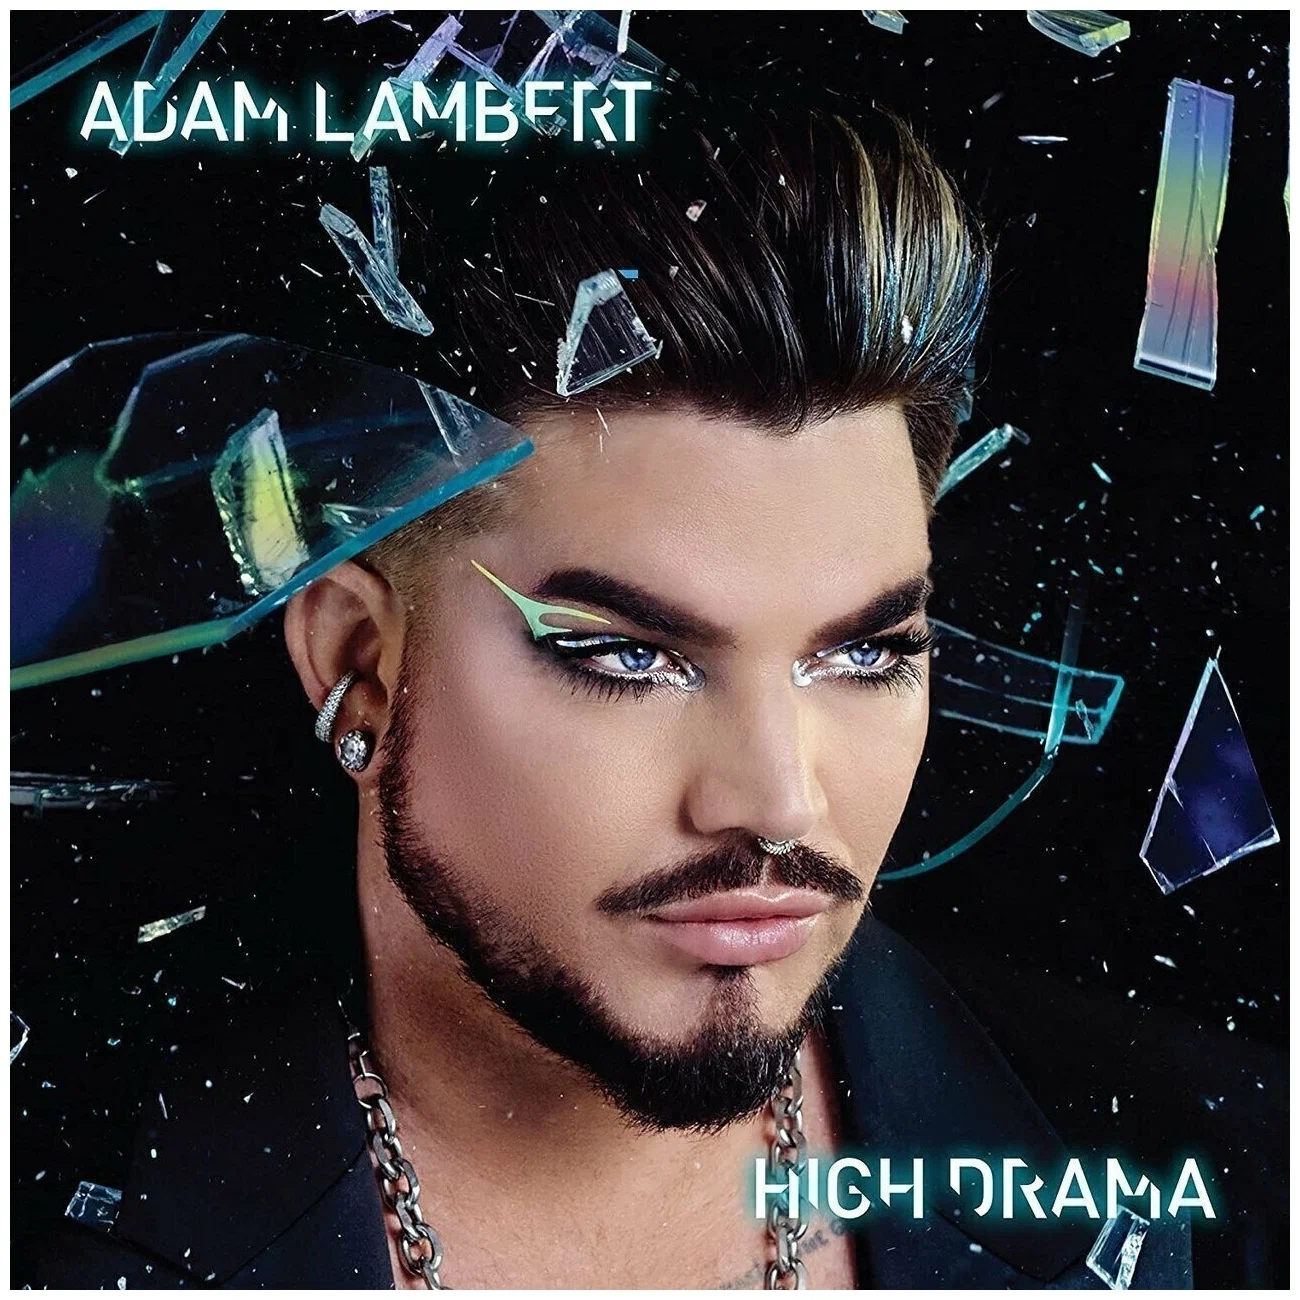 Виниловая Пластинка Lambert, Adam, High Drama (5054197308611) виниловая пластинка lambert adam high drama 5054197308628